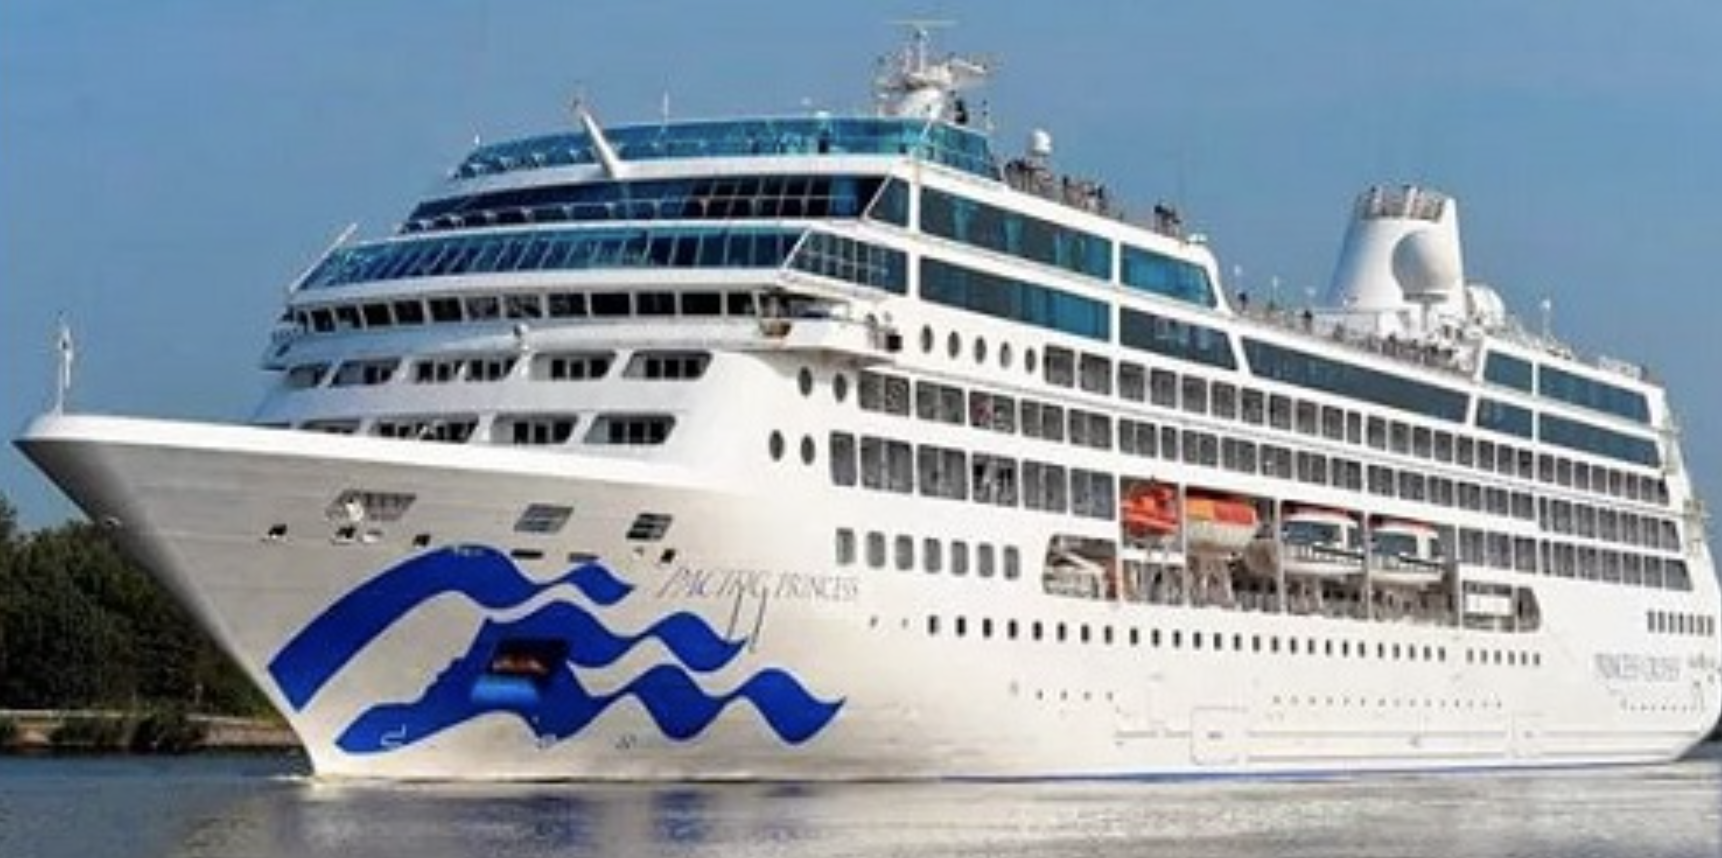 Princess Cruises Announces ‘Pacific Princess’ to Leave Fleet Hawaii